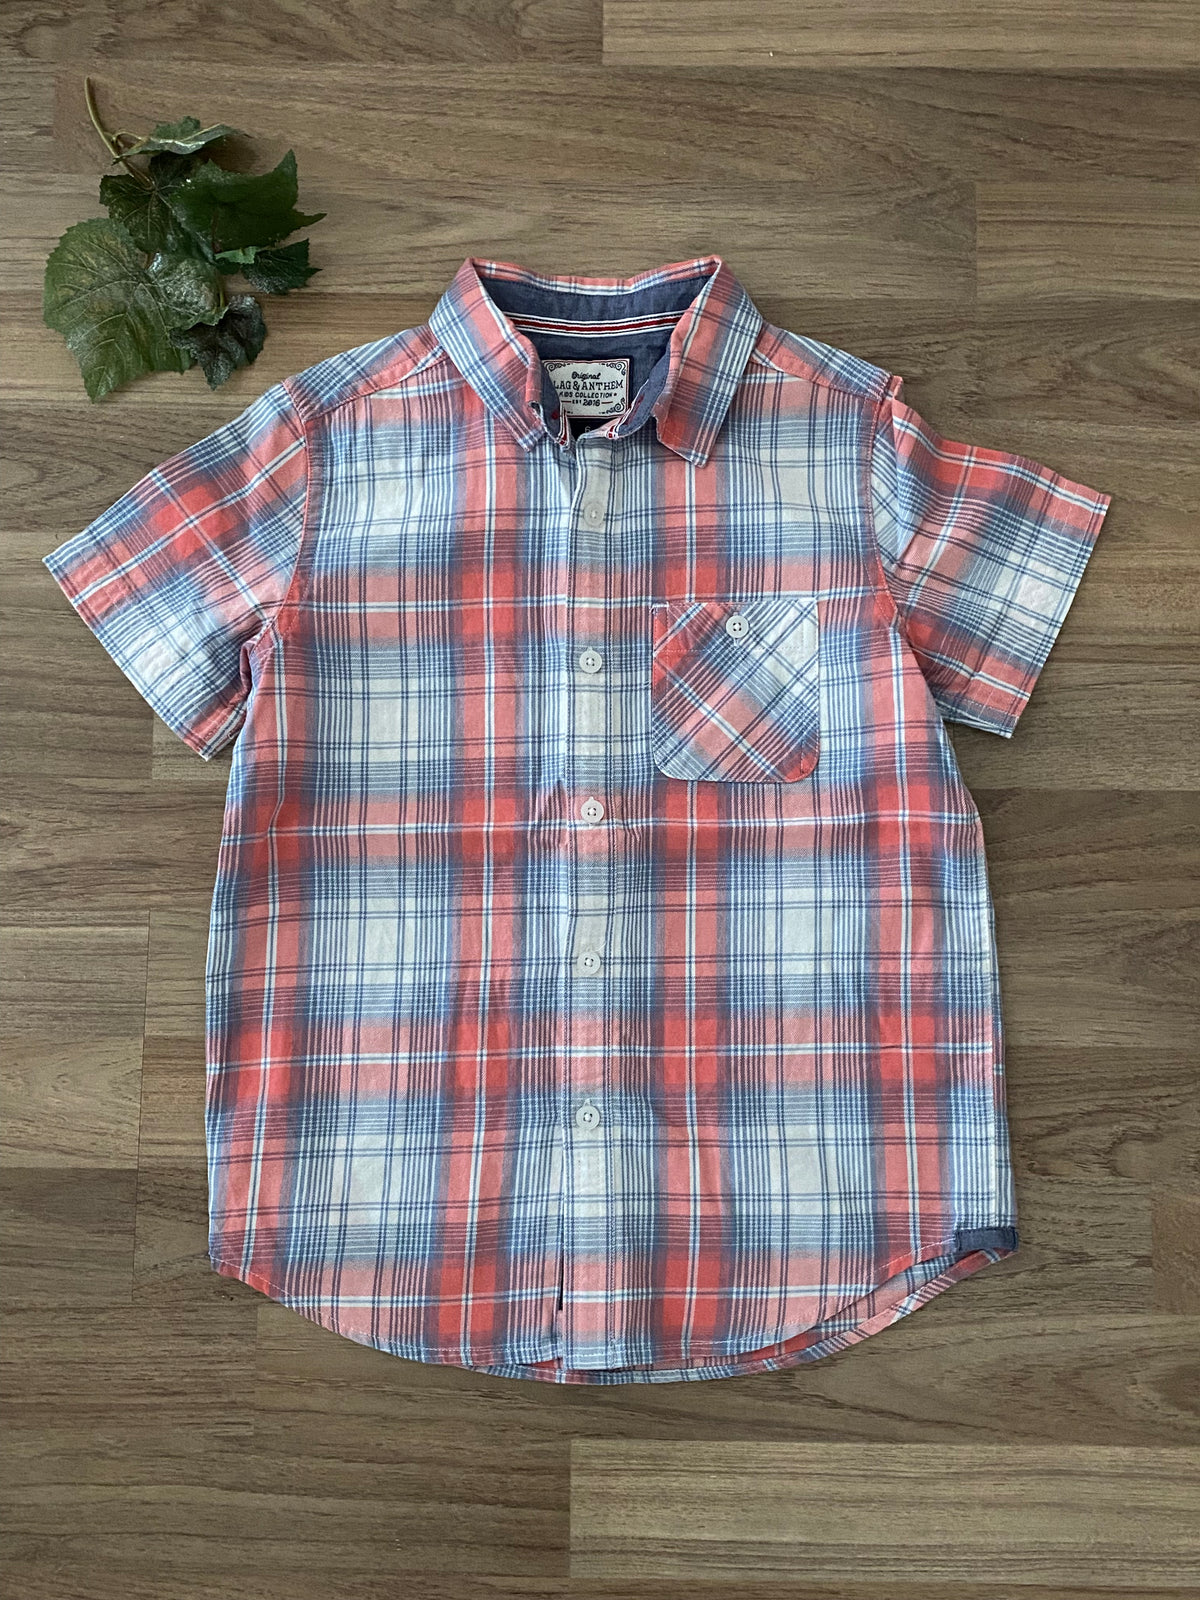 Short Sleeve Shirt (Boys Size 6)